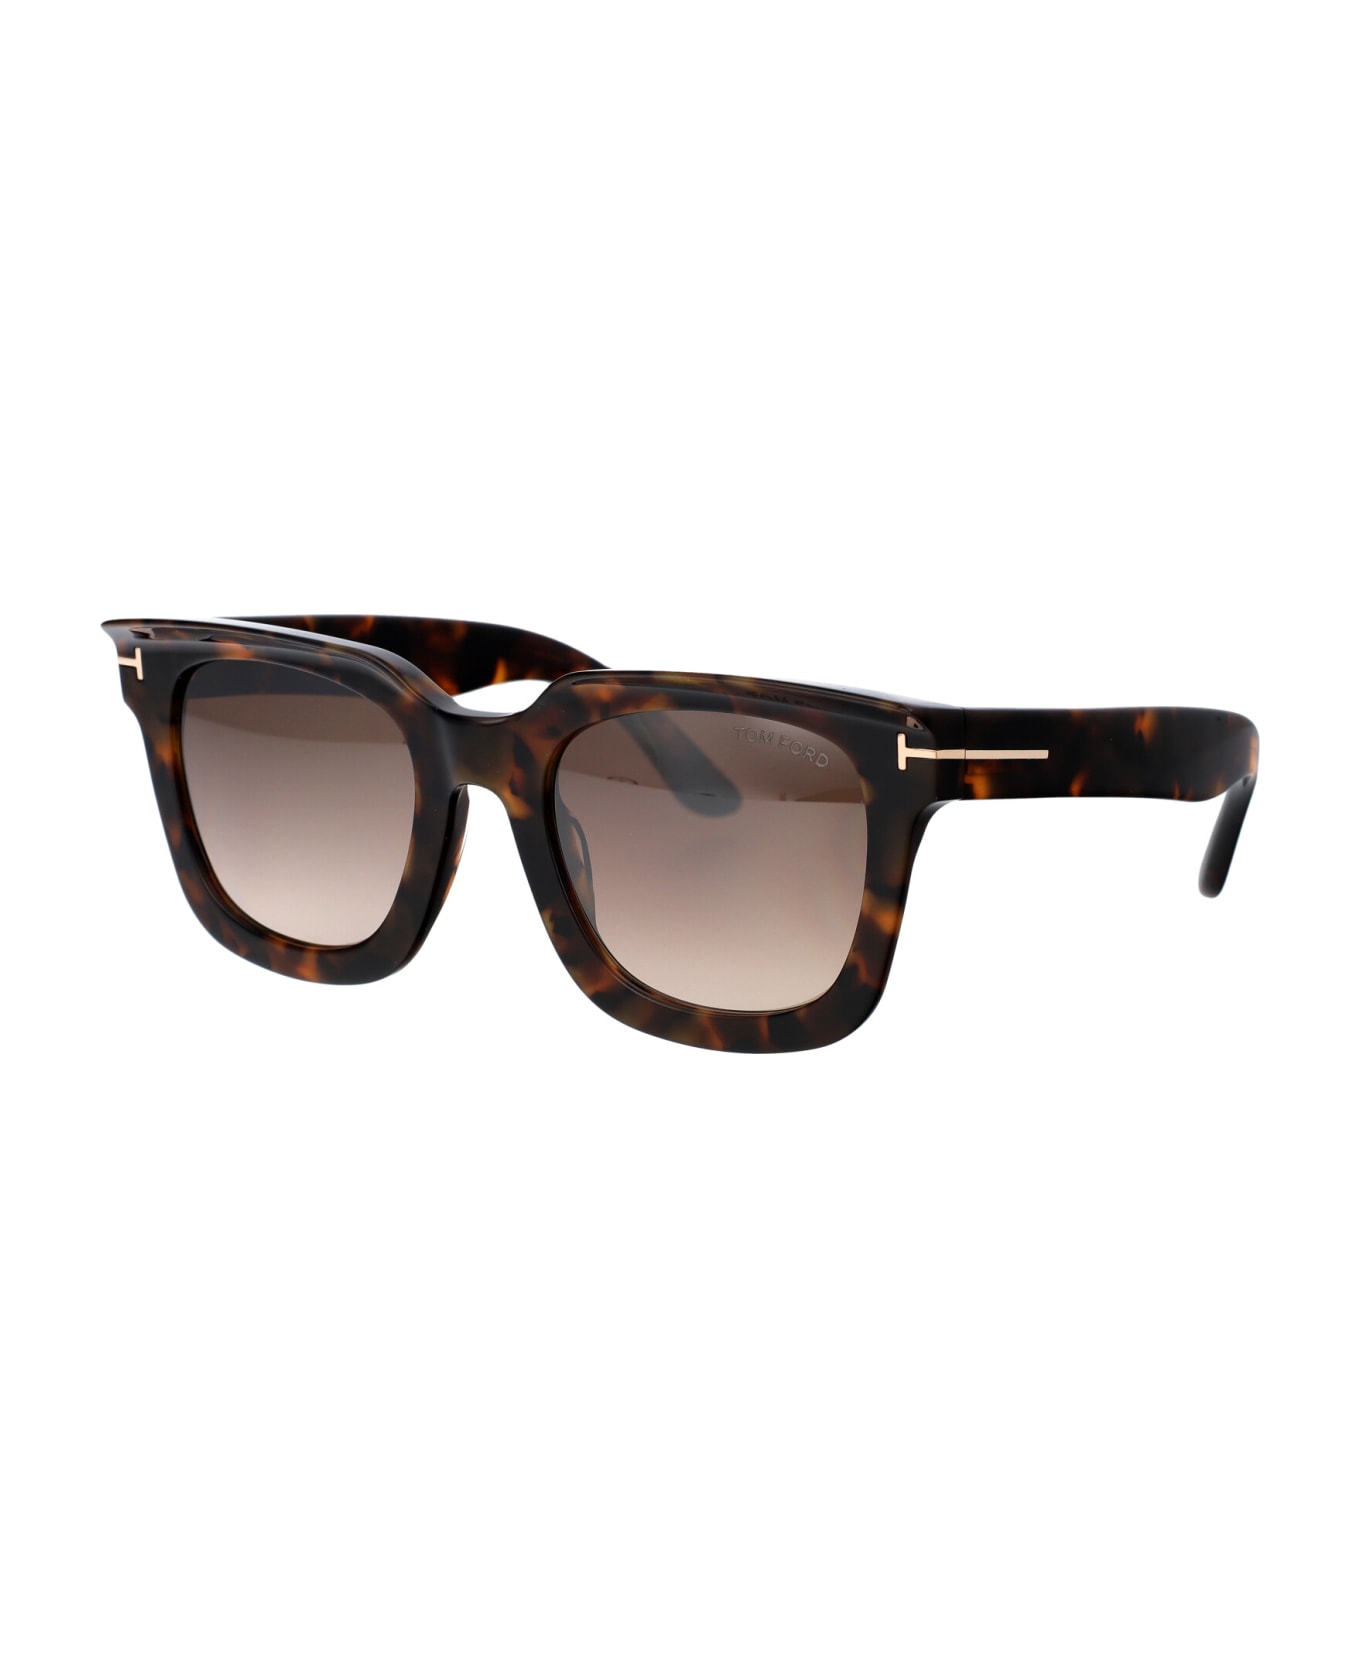 Tom Ford Eyewear Leigh-02 Sunglasses - 52G Avana Scura  / Marrone Specchiato サングラス